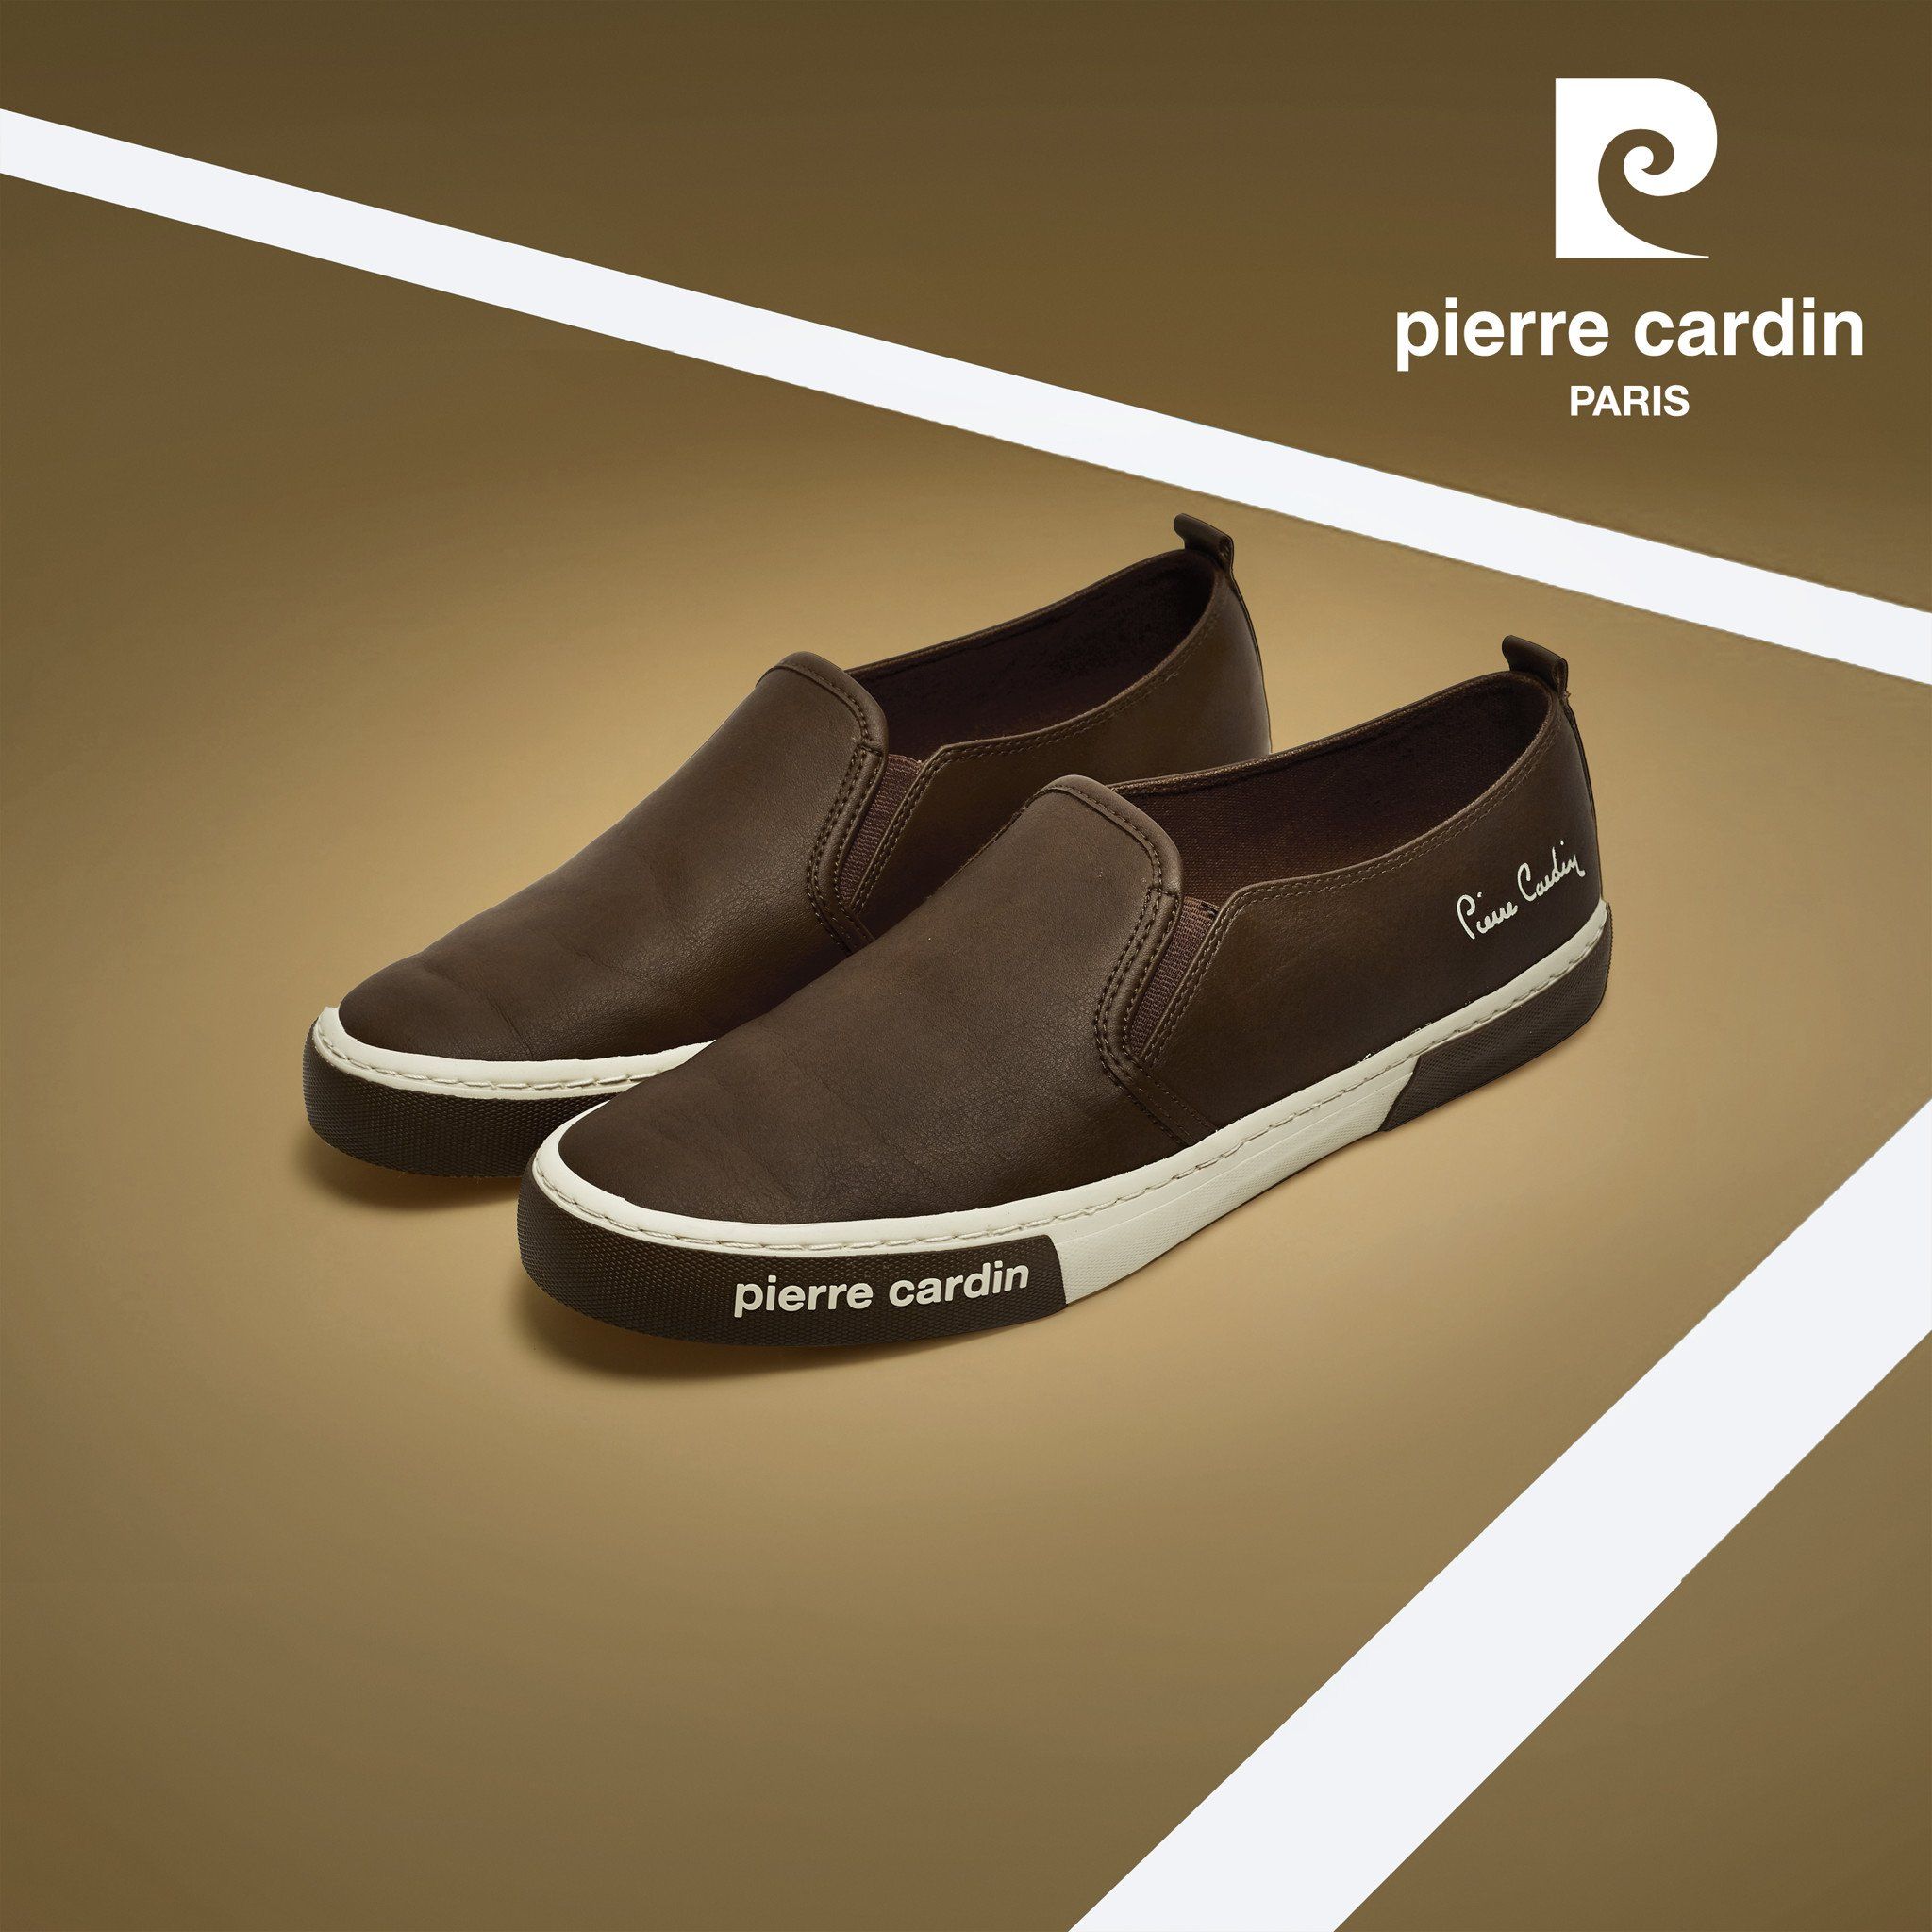 Pierre Cardin Paris Vietnam: GIÀY SLIP-ON PIERRE CARDIN - PCMFWFC 900